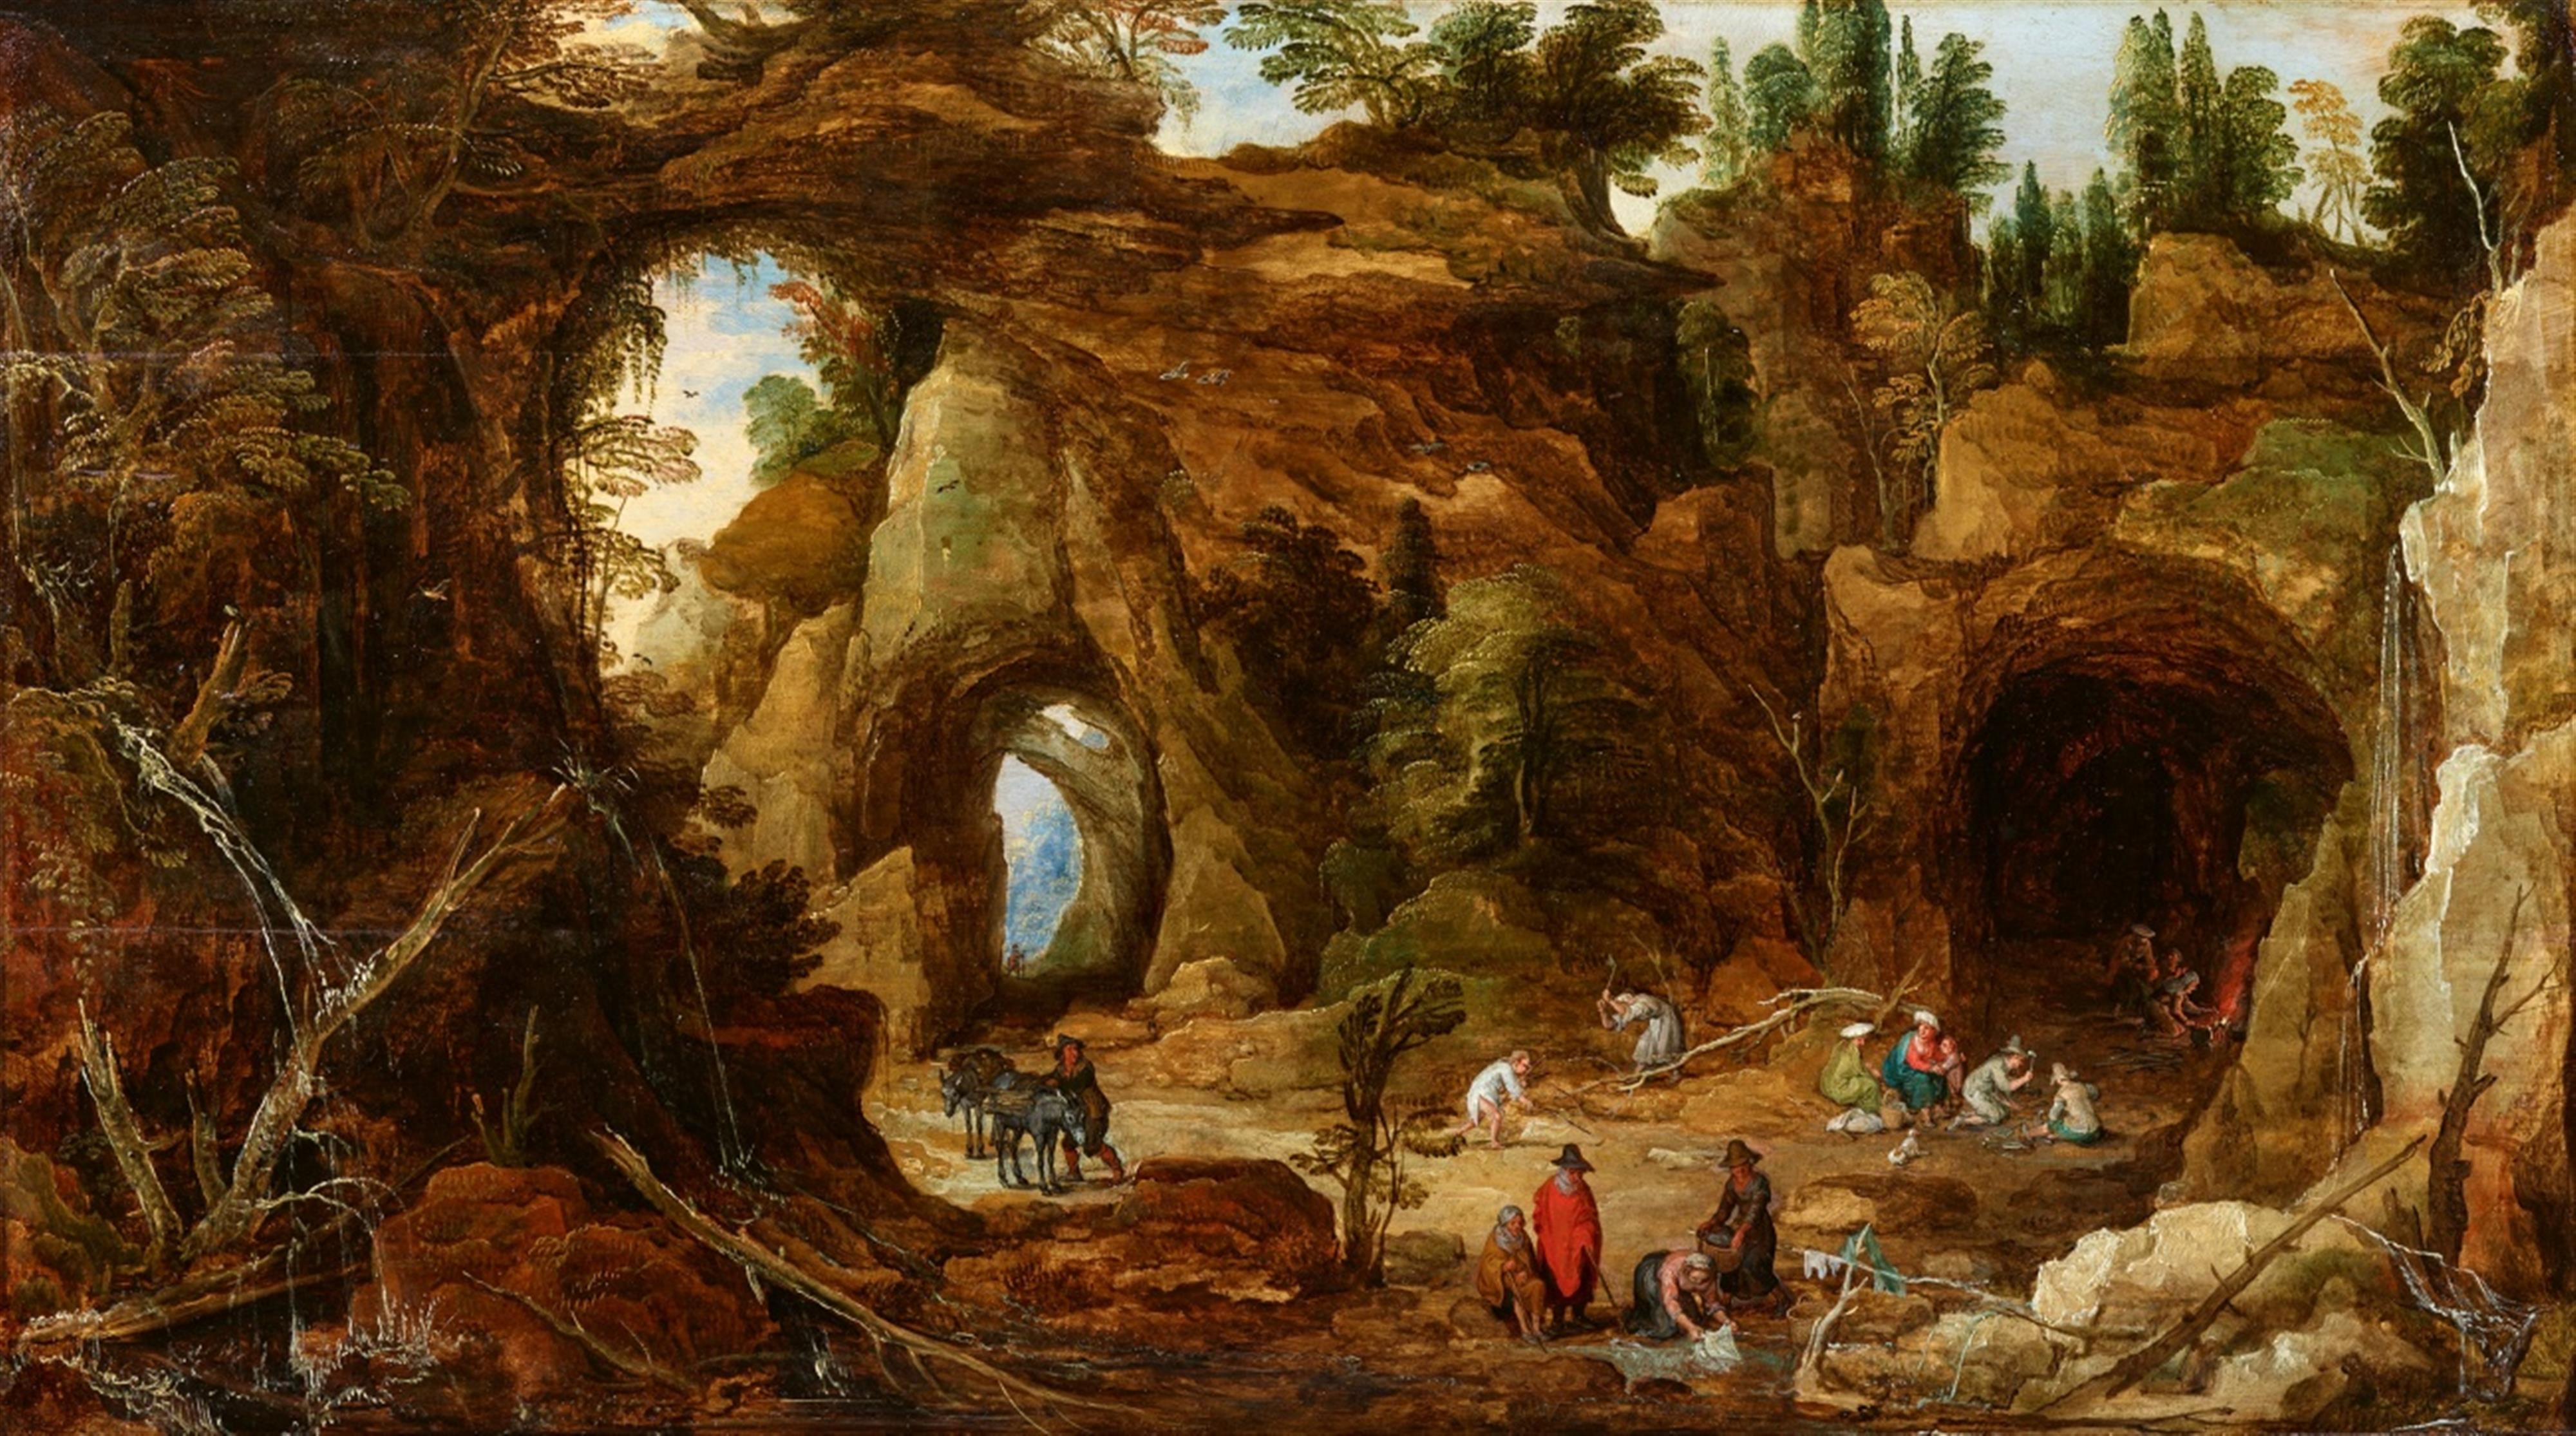 Joos de Momper
Jan Brueghel the Elder - Rocky Landscape with Figures by a Cave - image-1